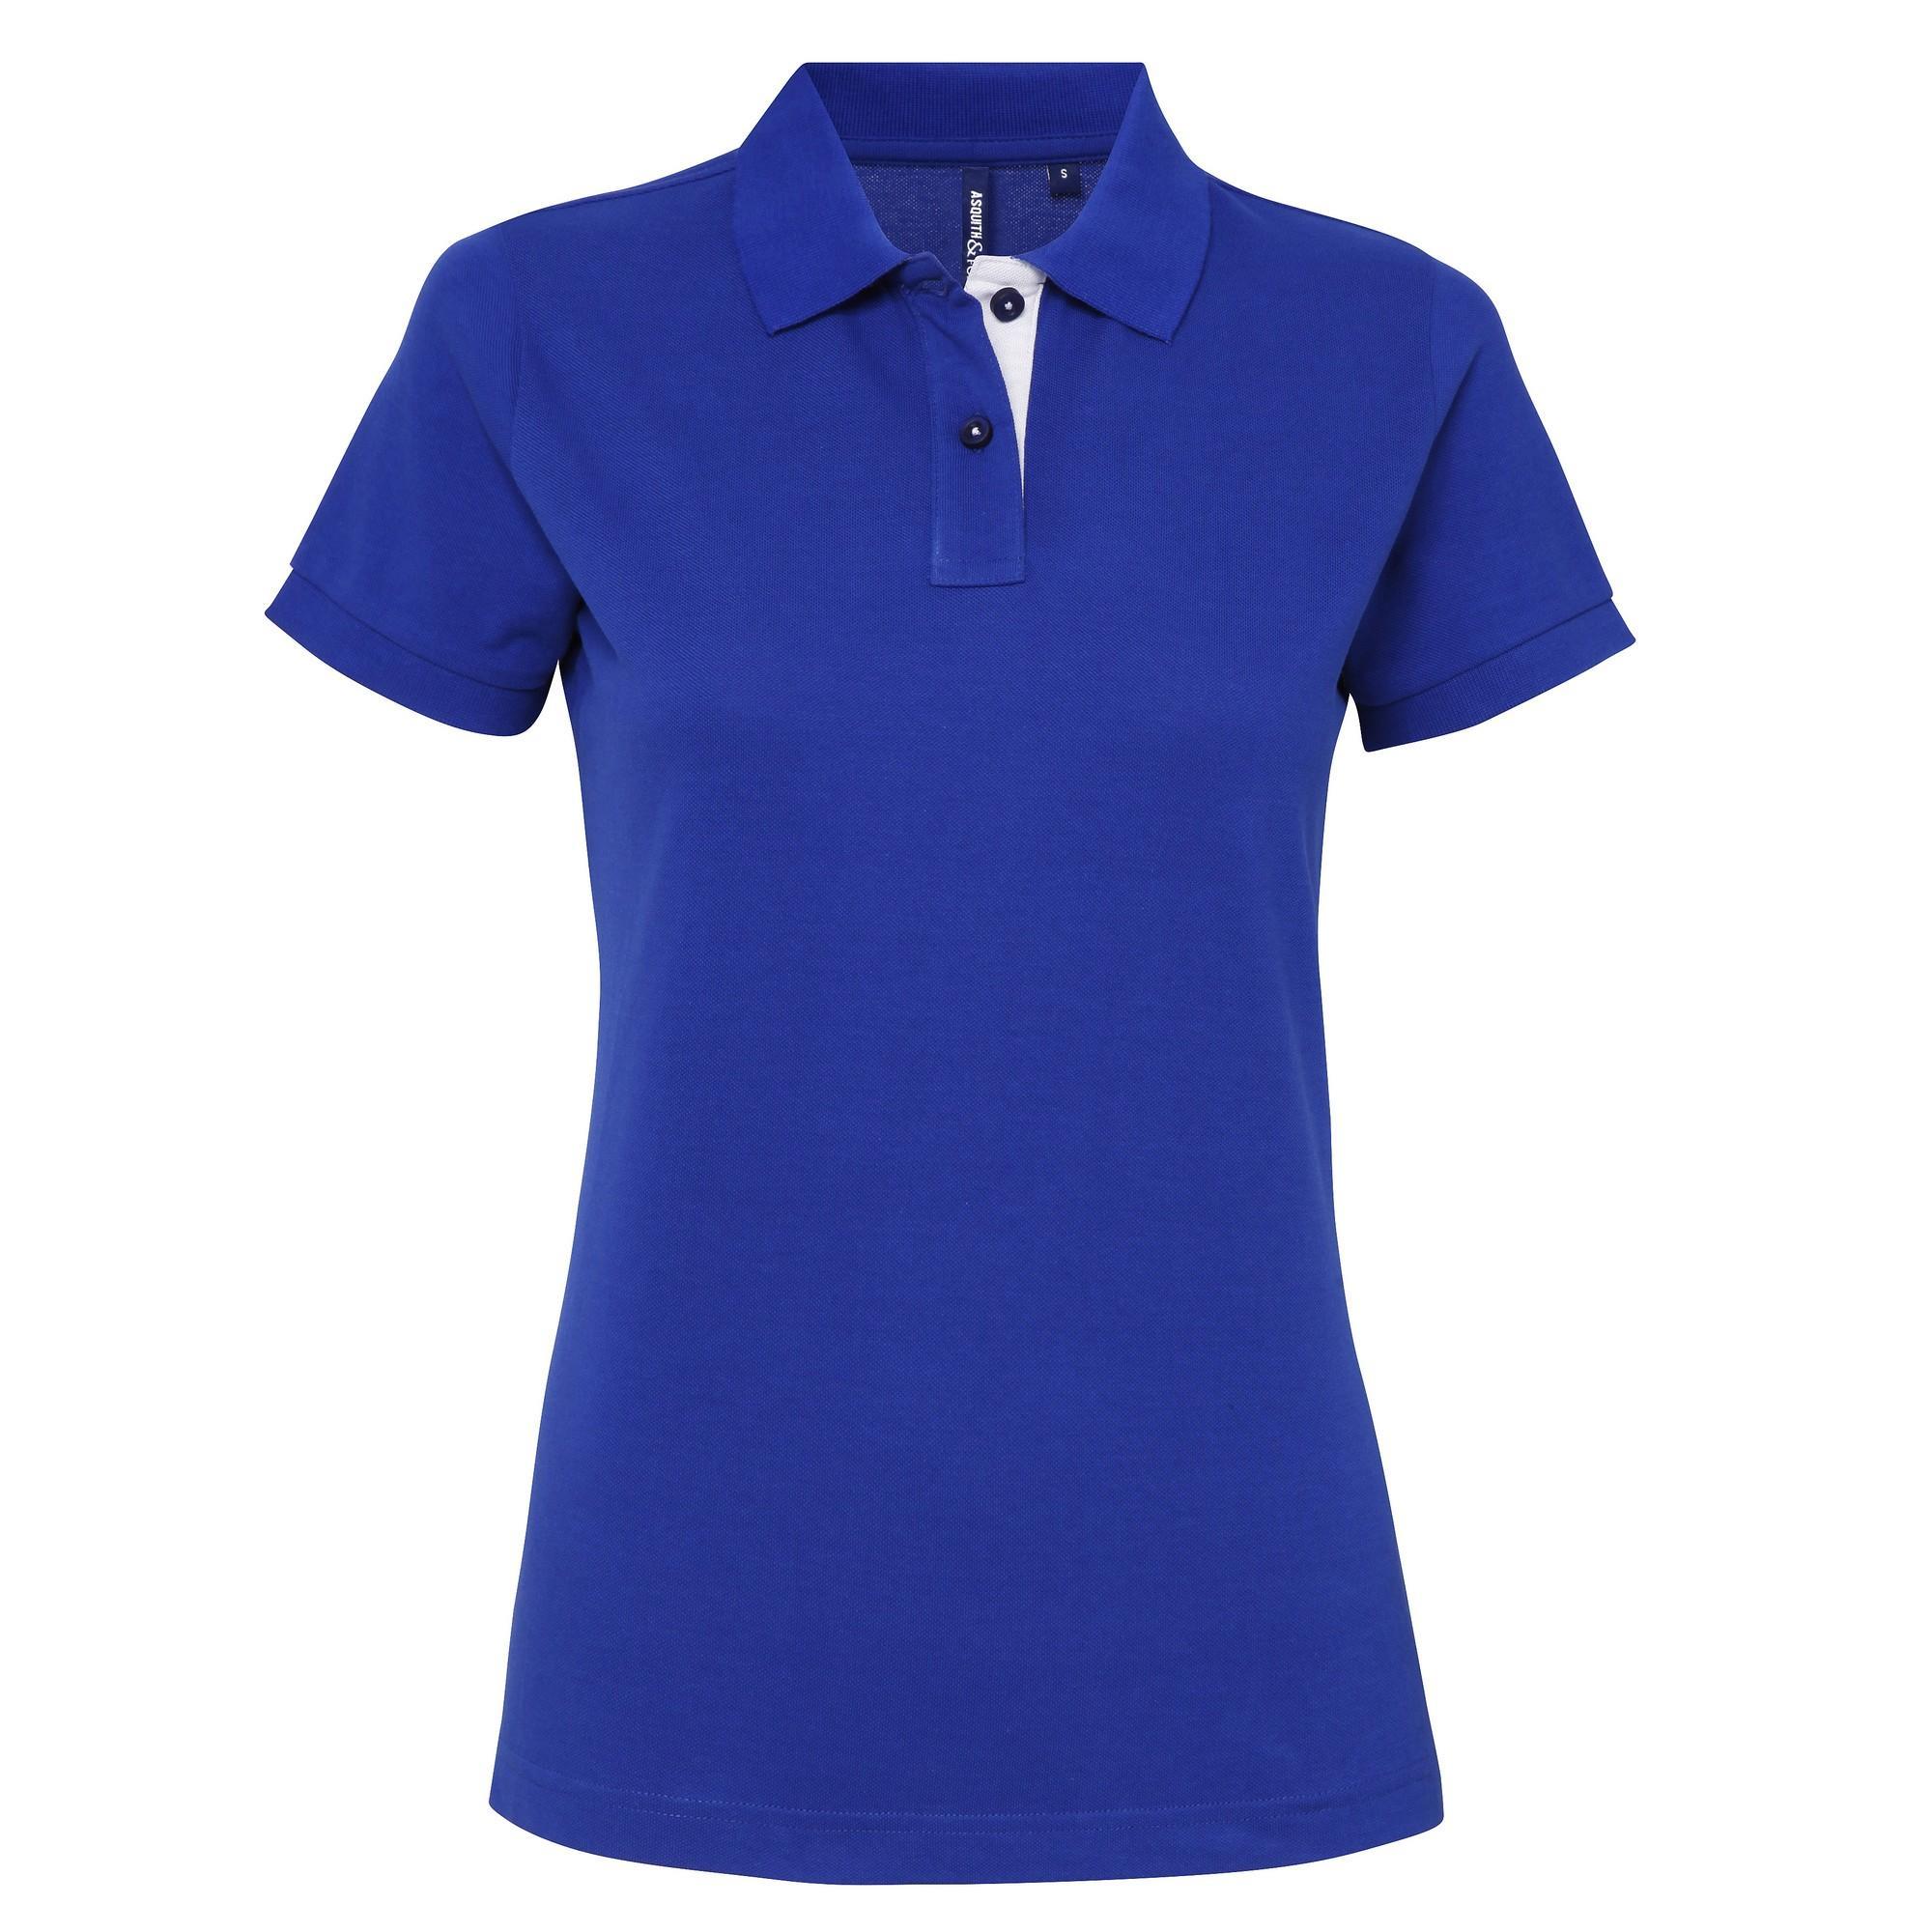 Asquith & Fox Womens/Ladies Short Sleeve Contrast Polo Shirt (Royal/ White) (L)